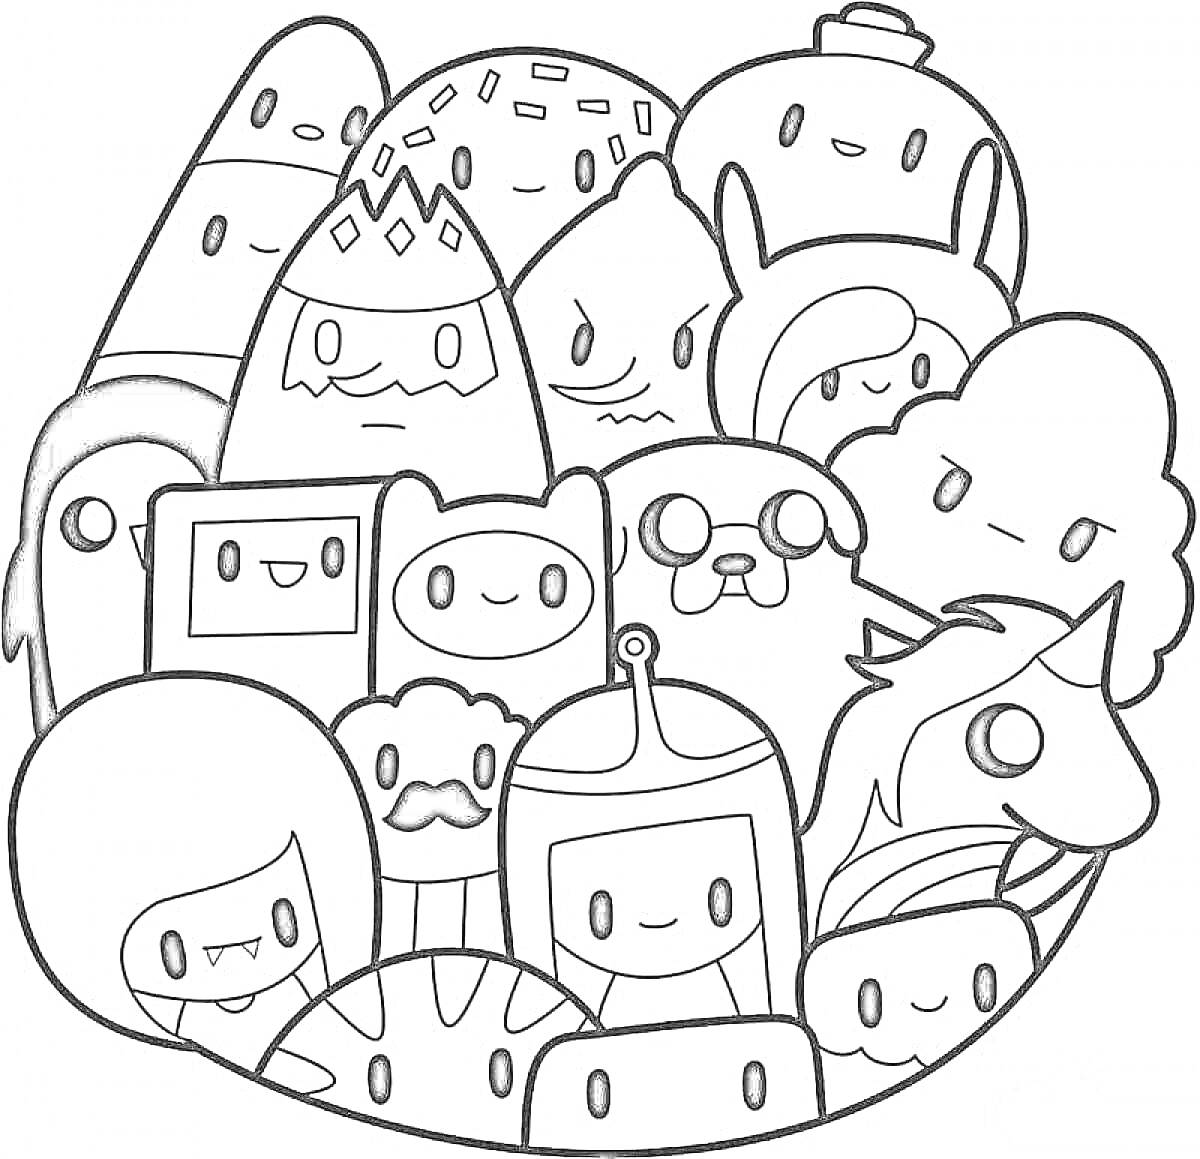 Раскраска Персонажи кавай в стиле Adventure Time